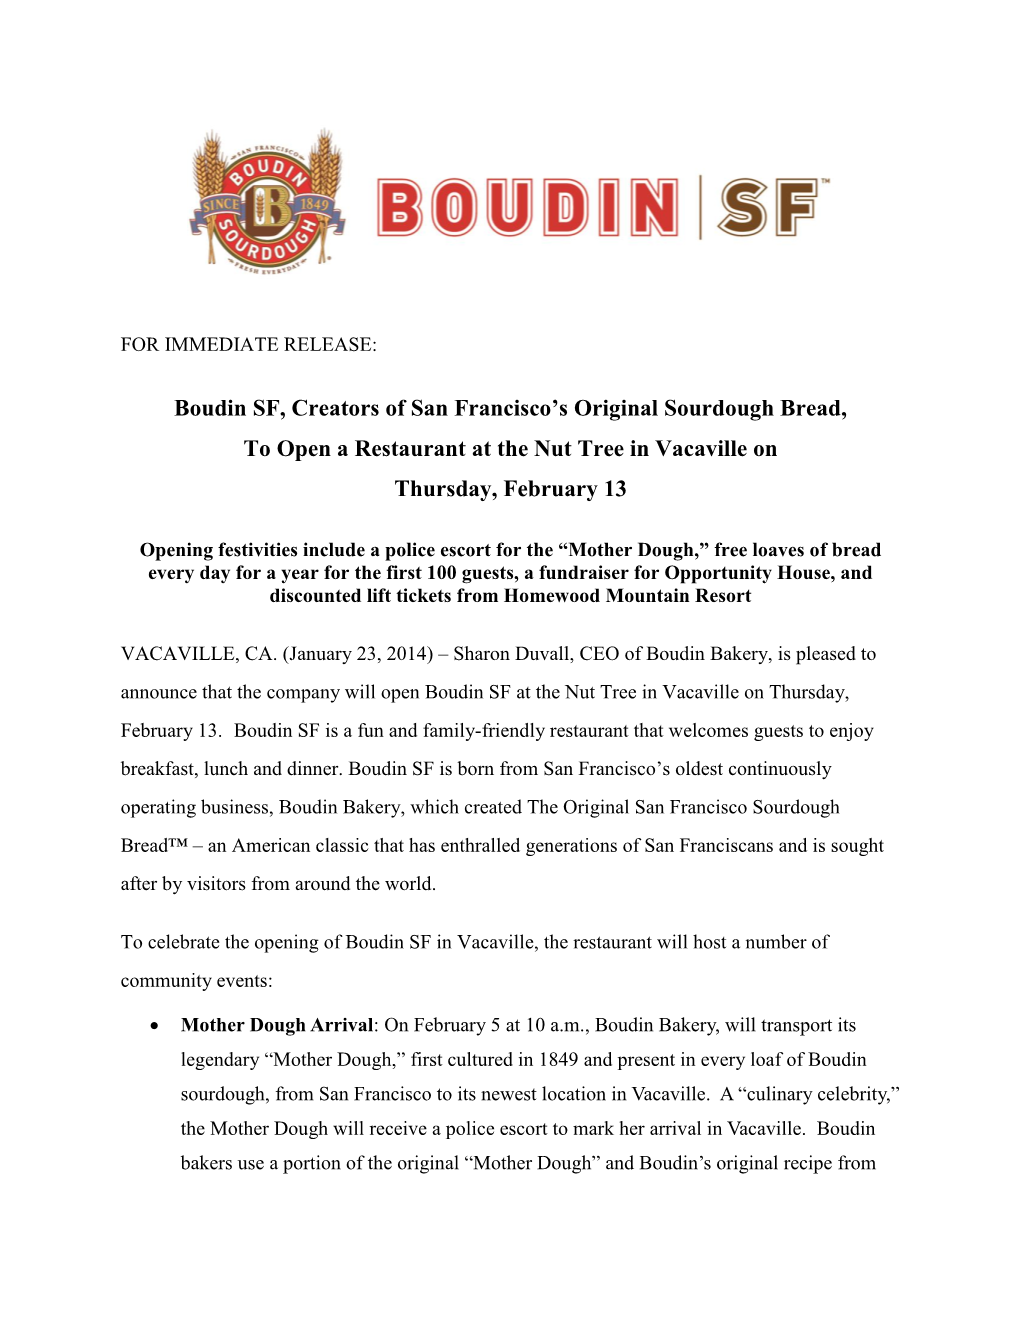 Boudin SF, Creators of San Francisco's Original Sourdough